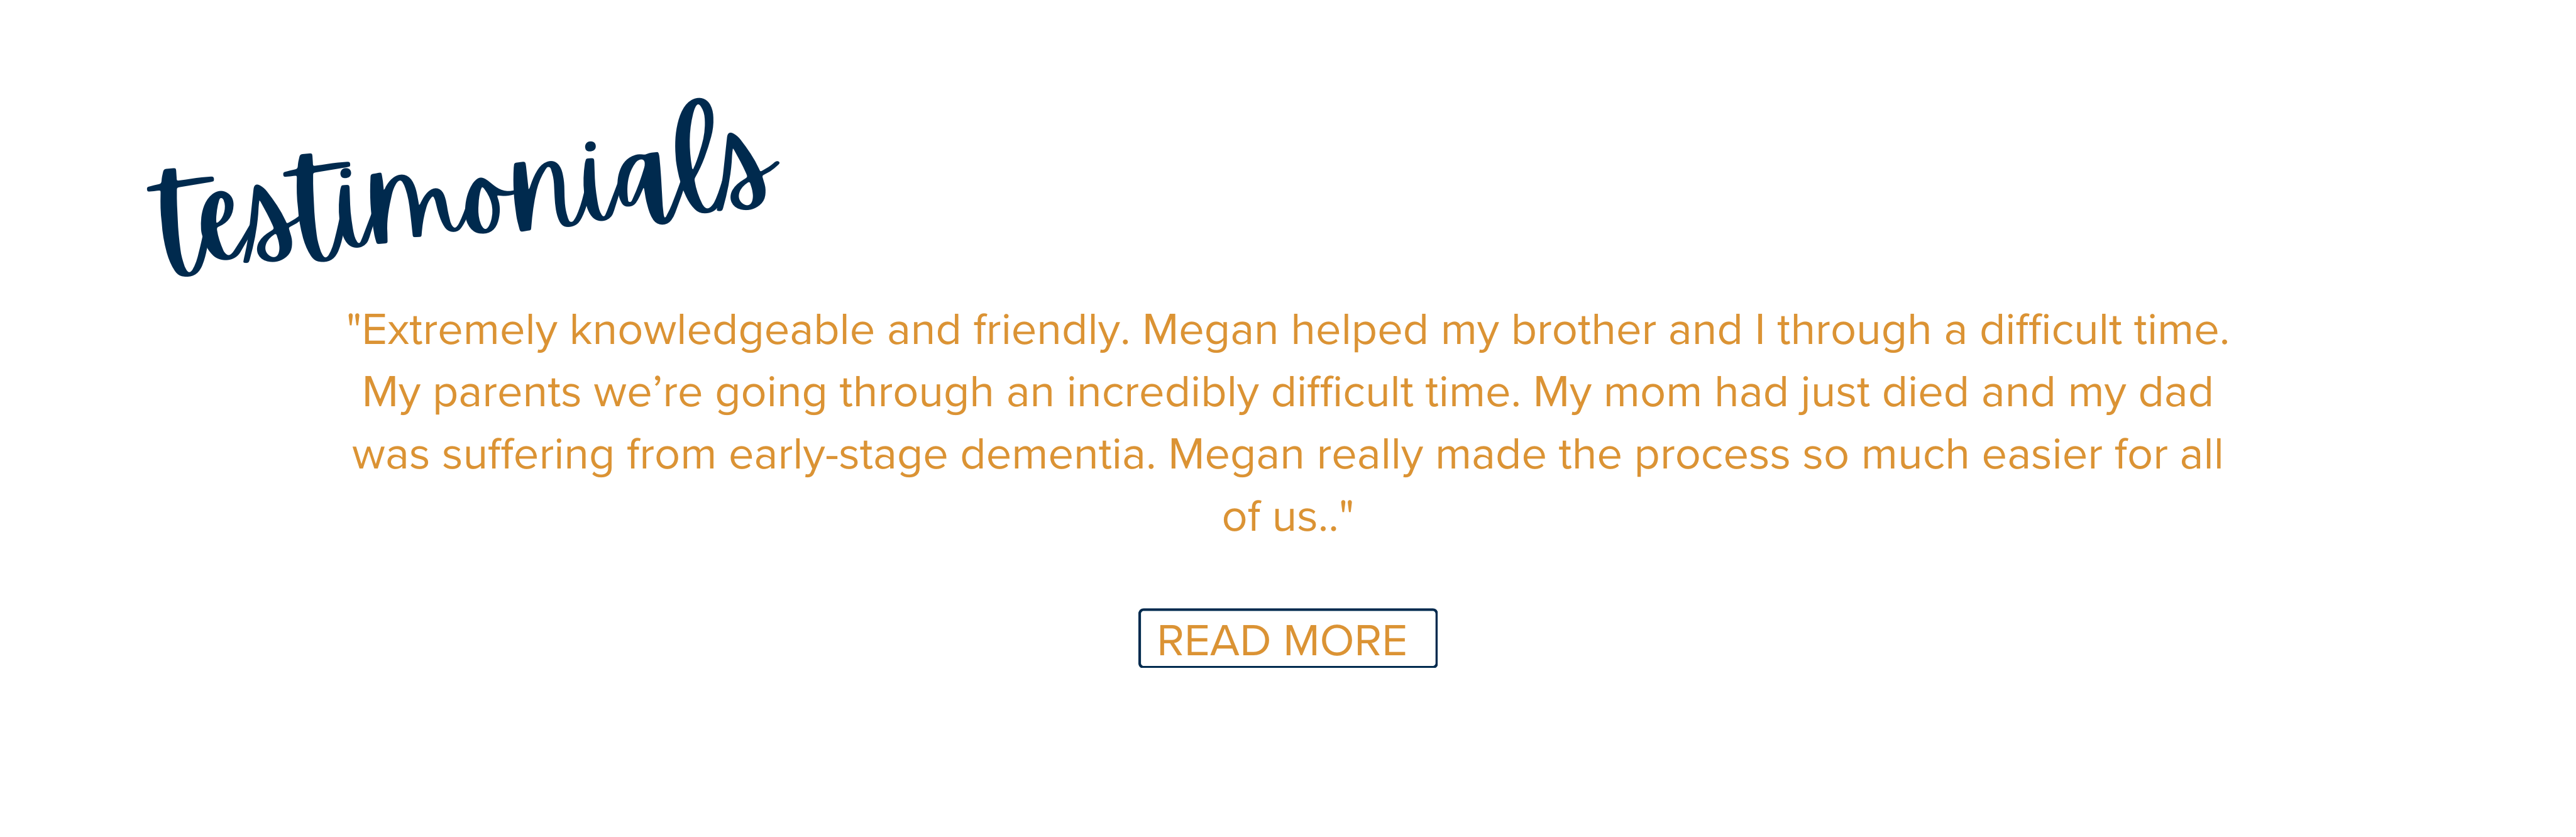 Testimonials, Megan